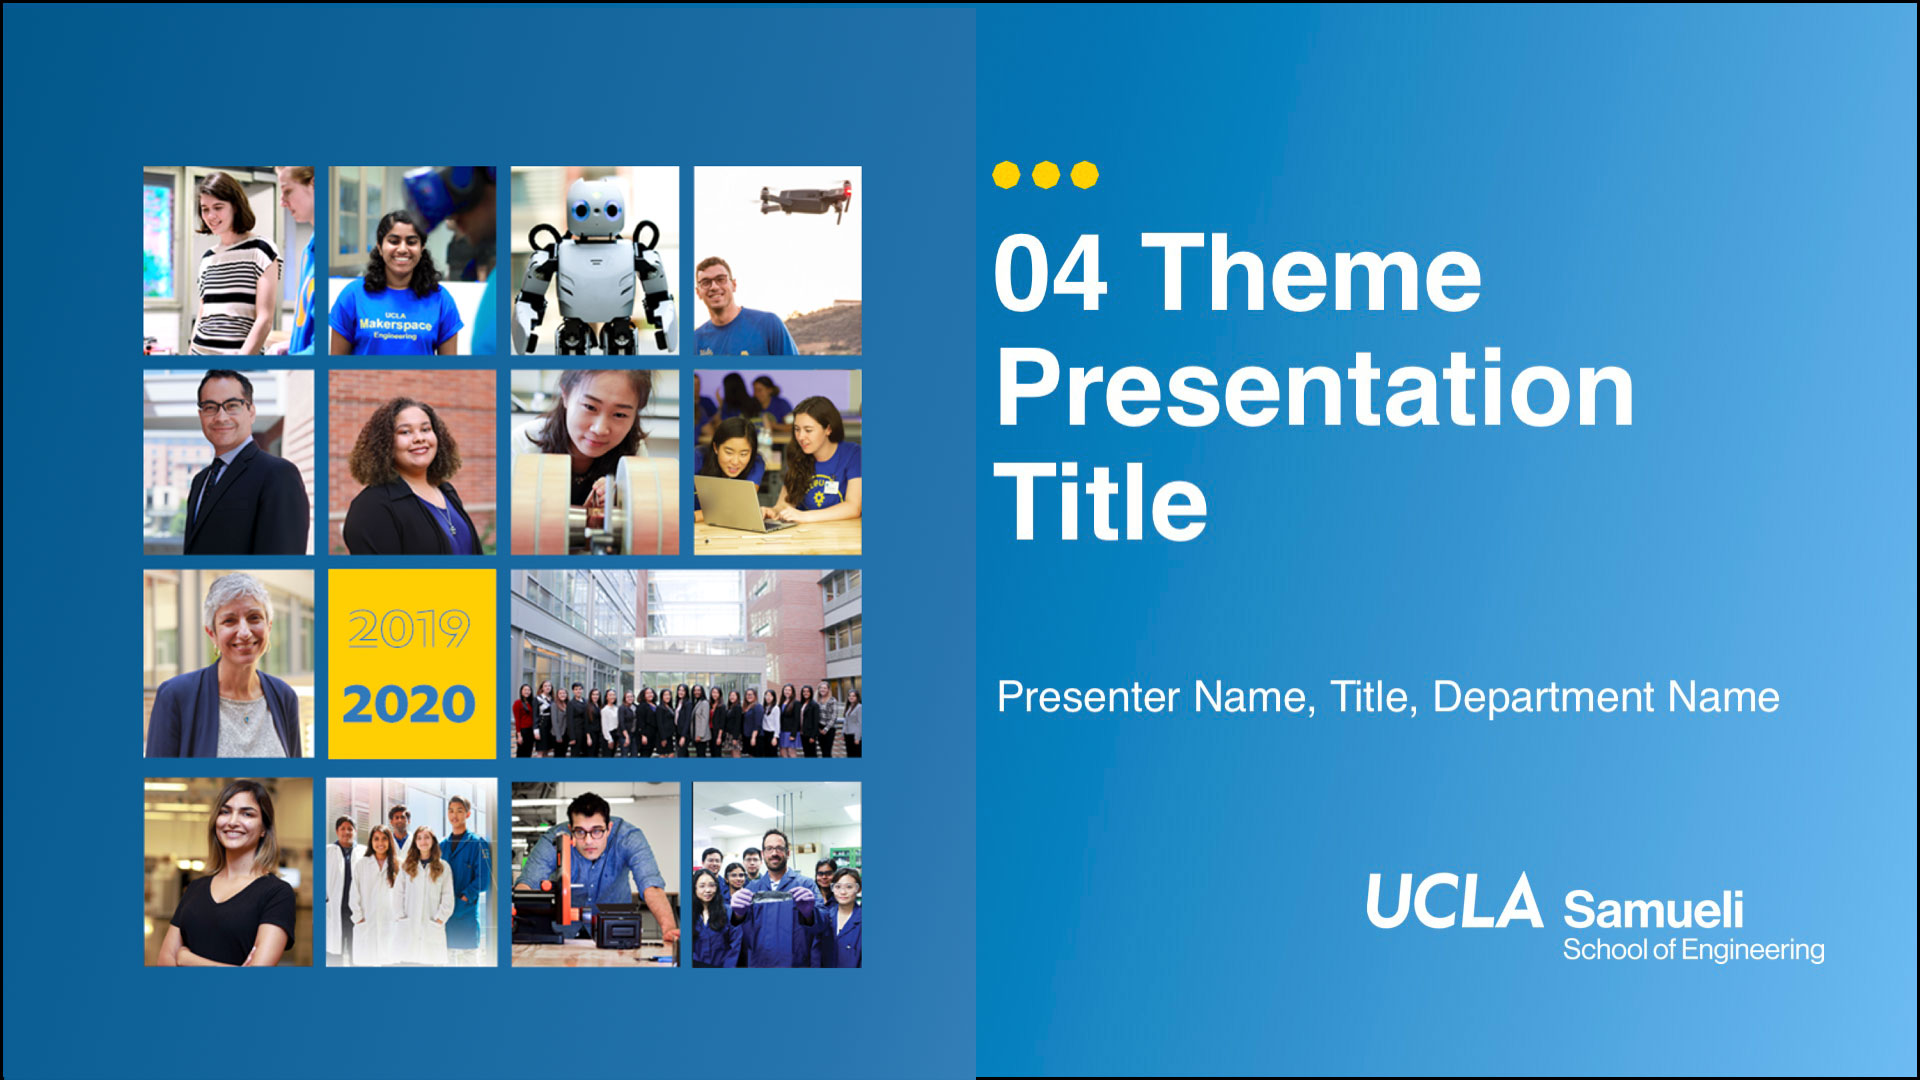 UCLA Samueli School of Engineering PowerPoint Presentation Template with Image